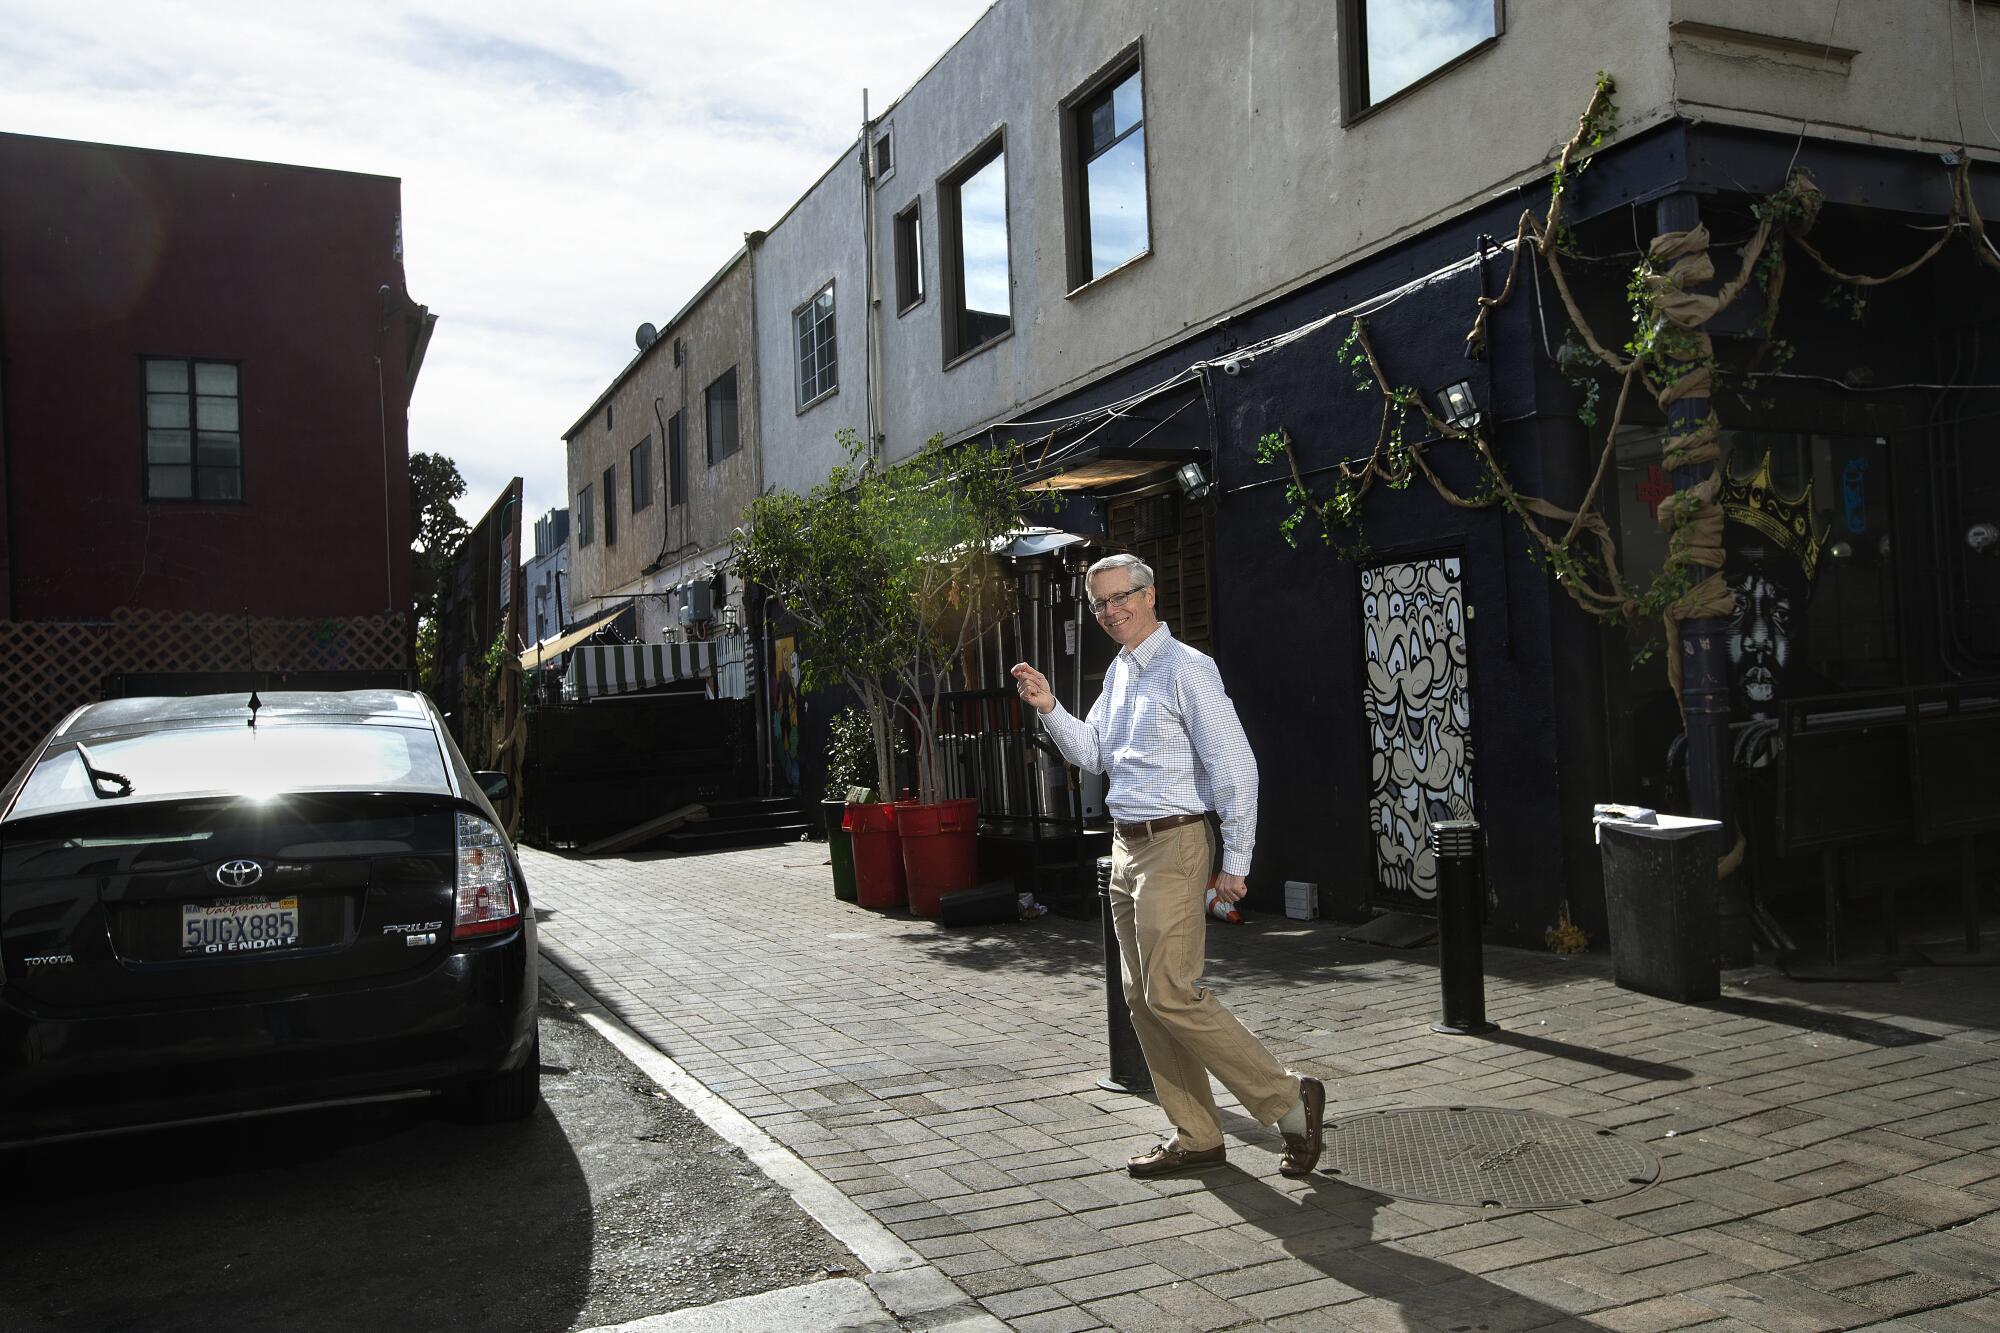 John Bengtson poses in a urban alleyway